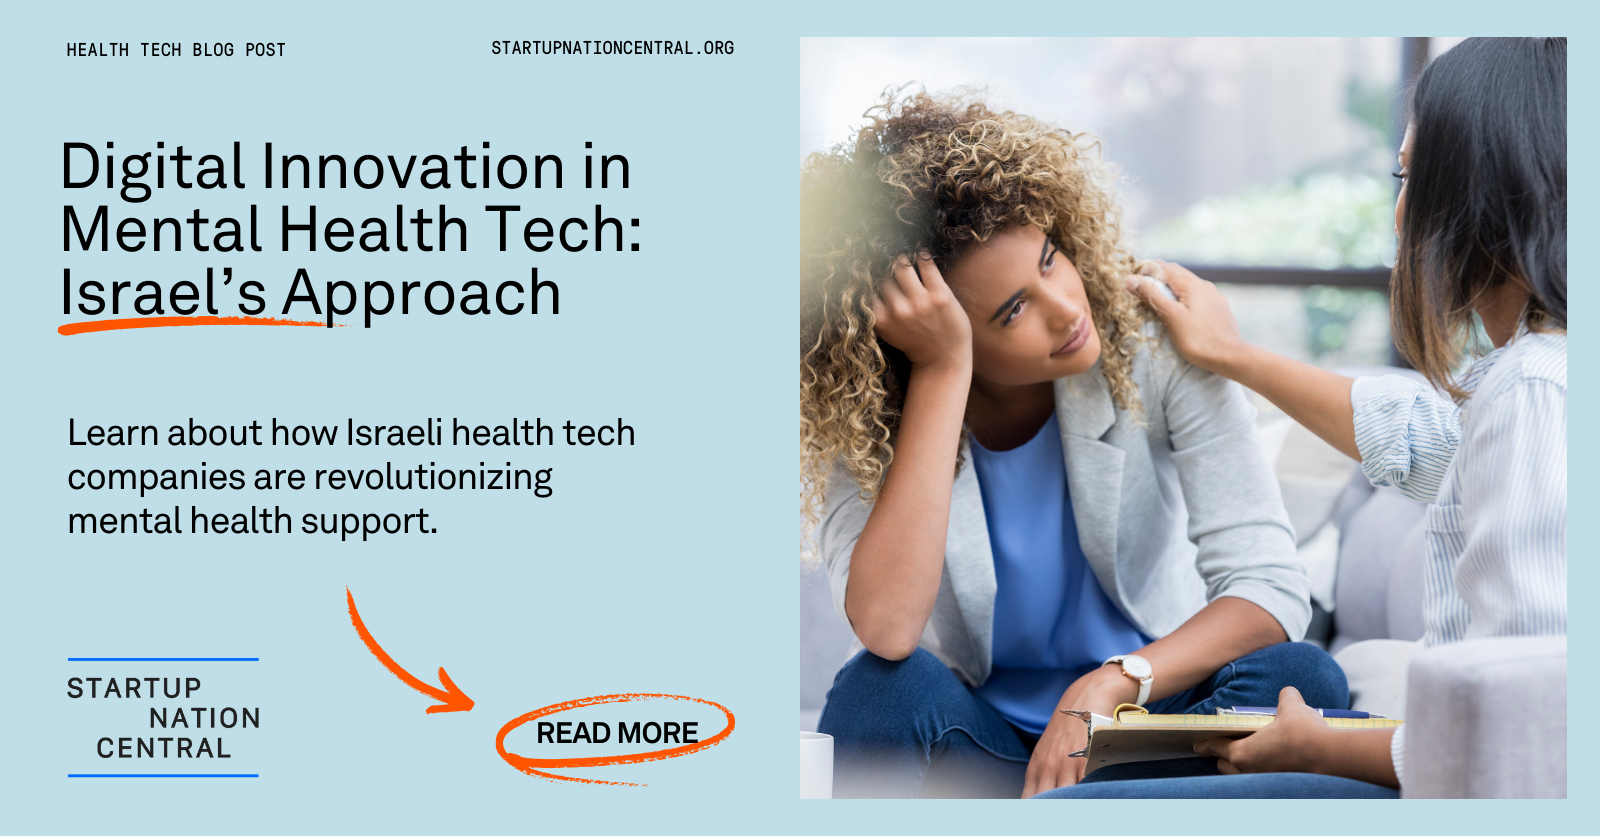 Digital Innovation in Mental Health Tech: Israel’s Approach